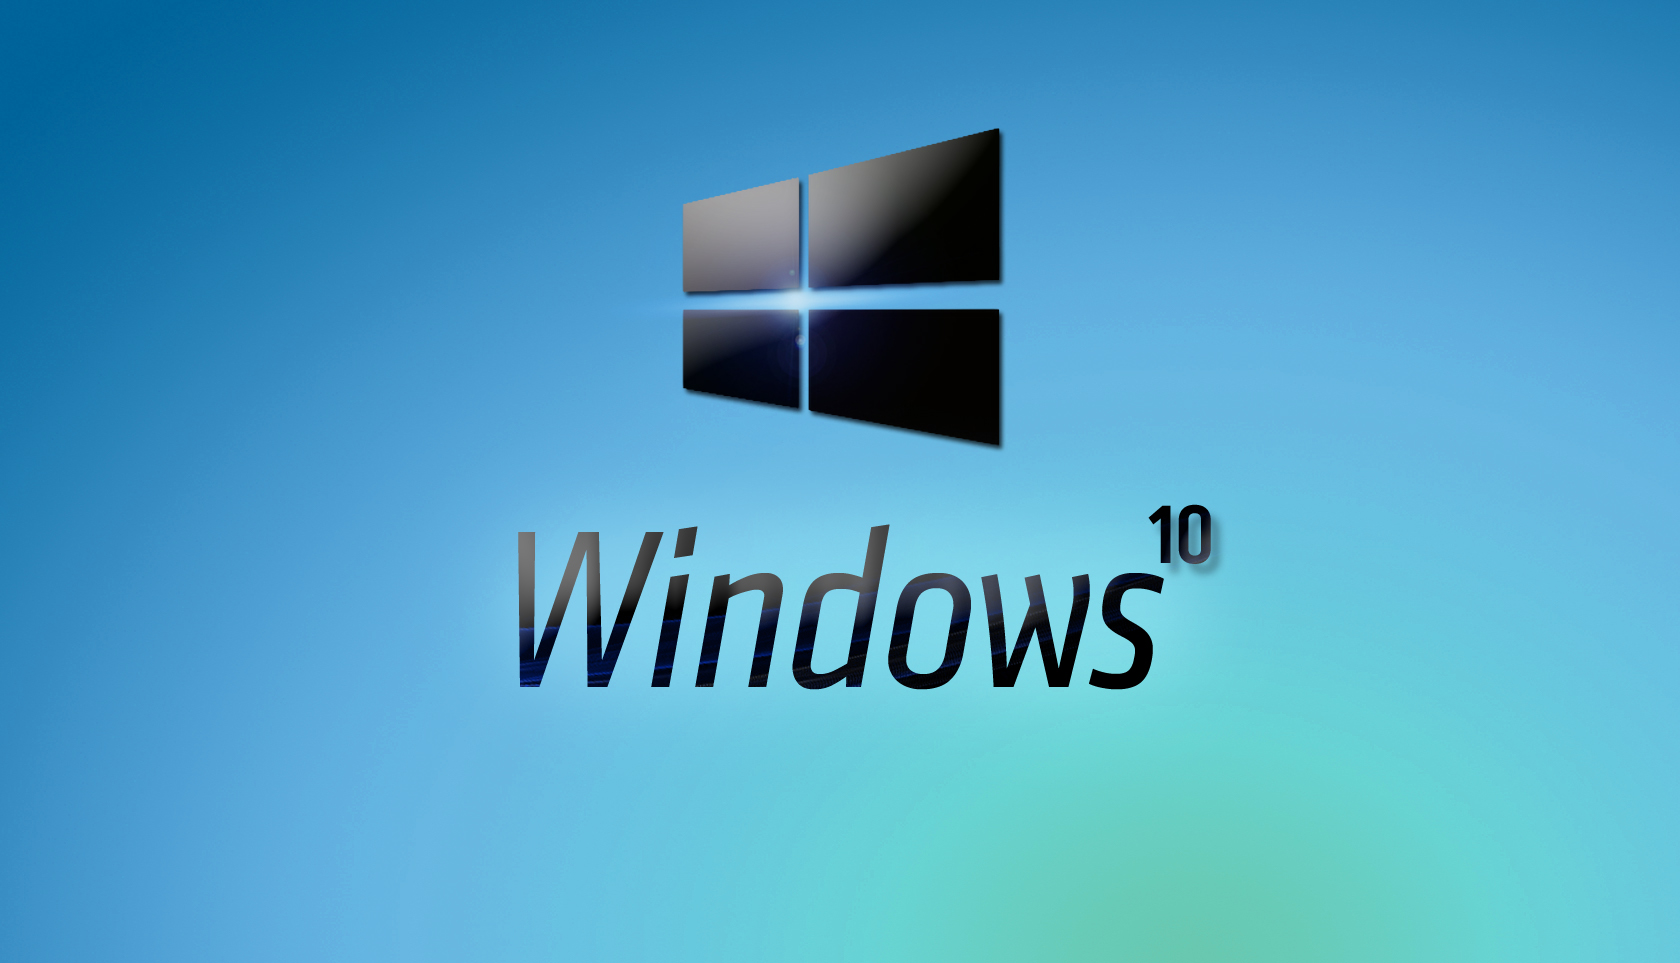 windows, technology, windows 10, logo